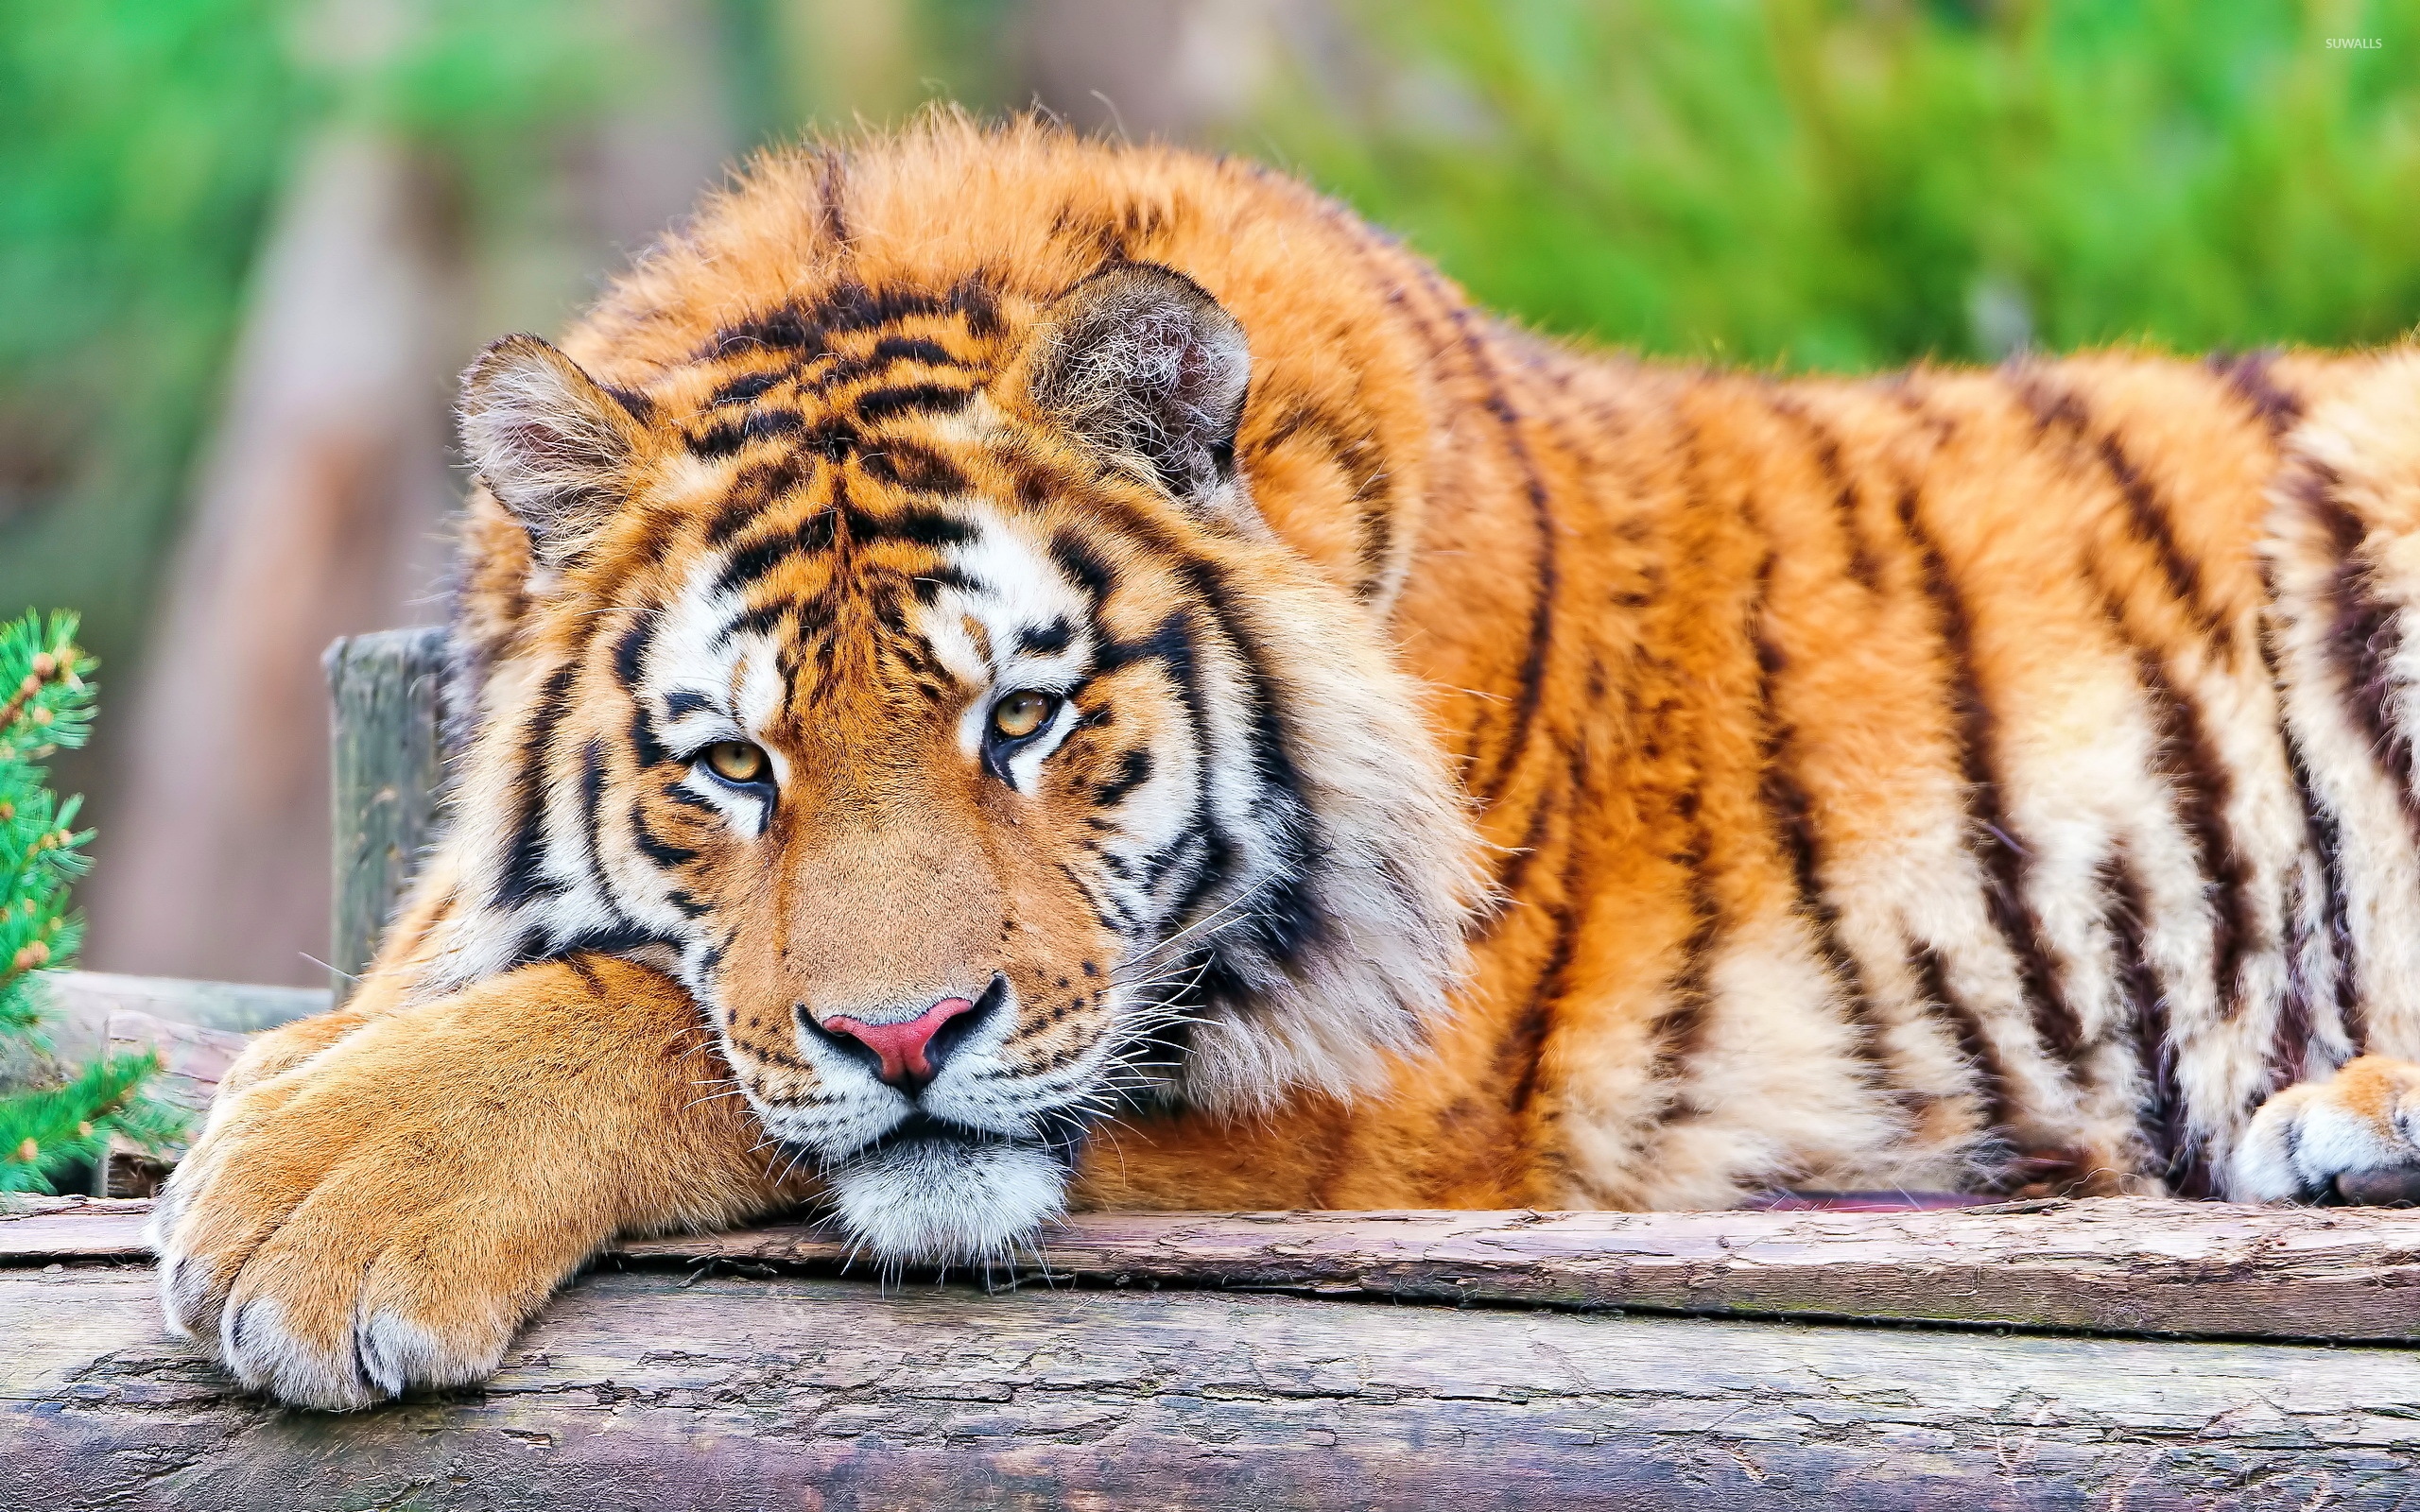 Tiger Photo - HD Background